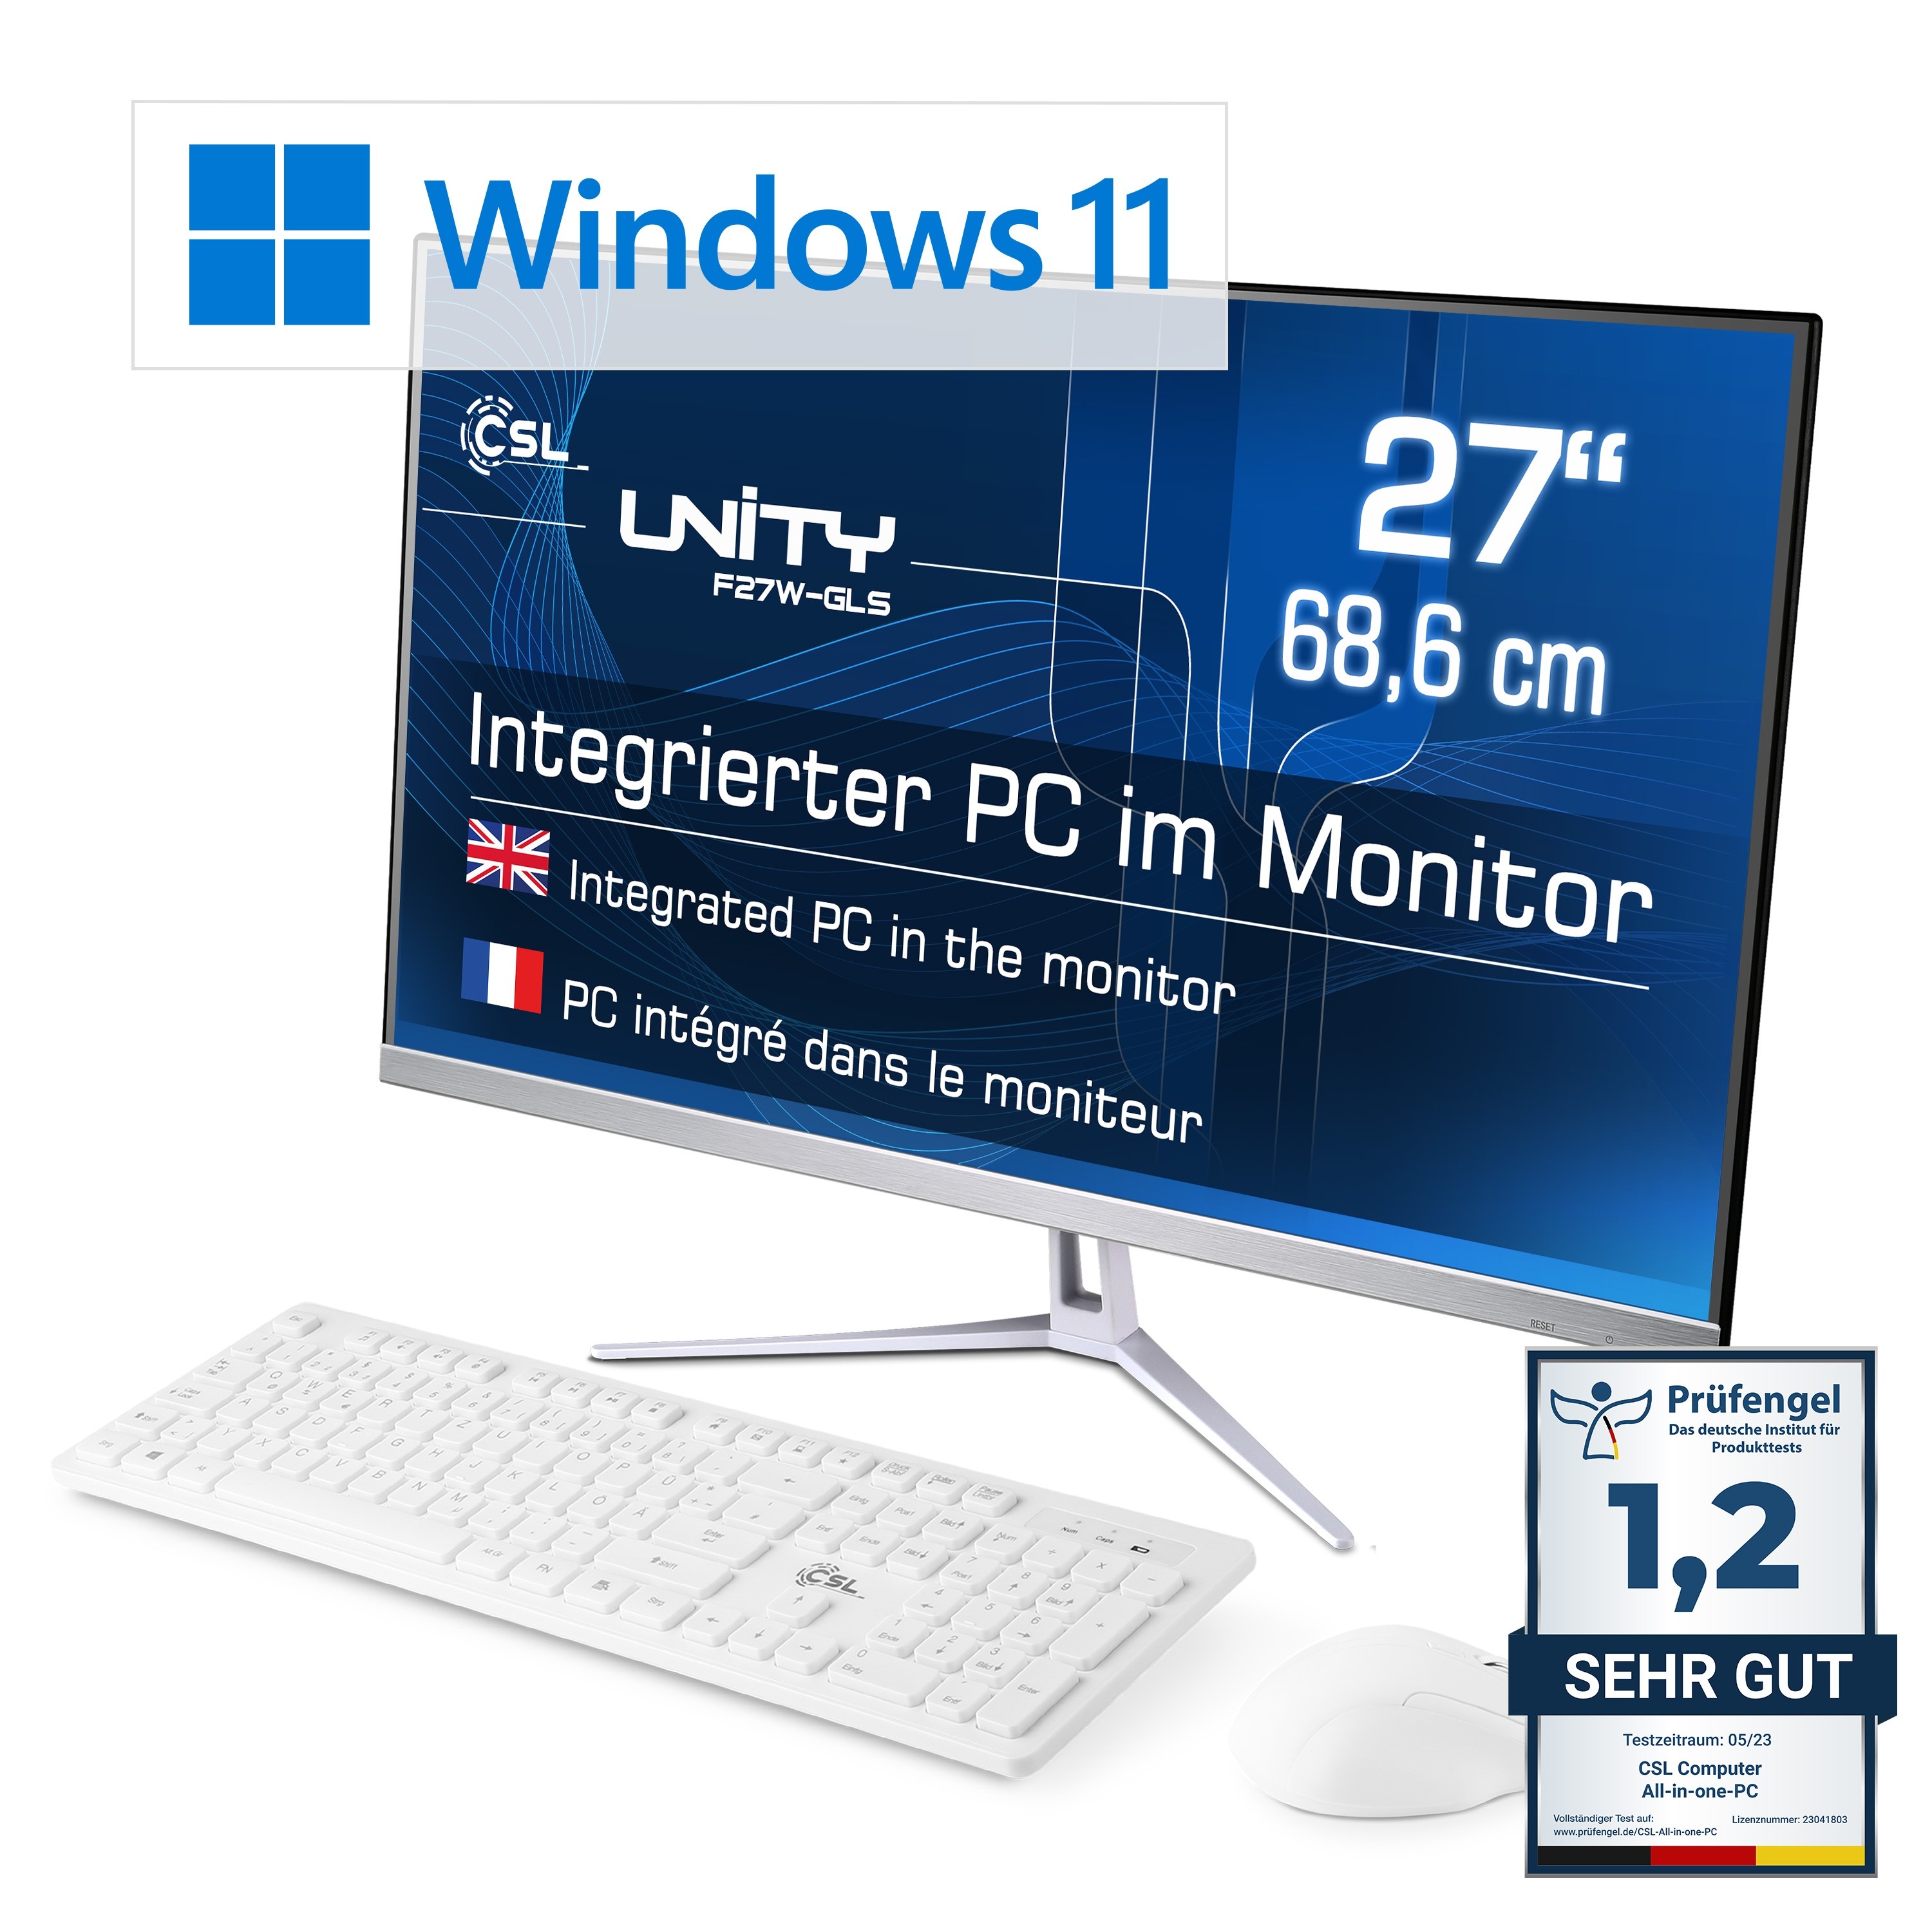 256 RAM 16 GB Computer Windows 11 / | GB / All-in-One-PC Home CSL / Unity CSL F27W-JLS